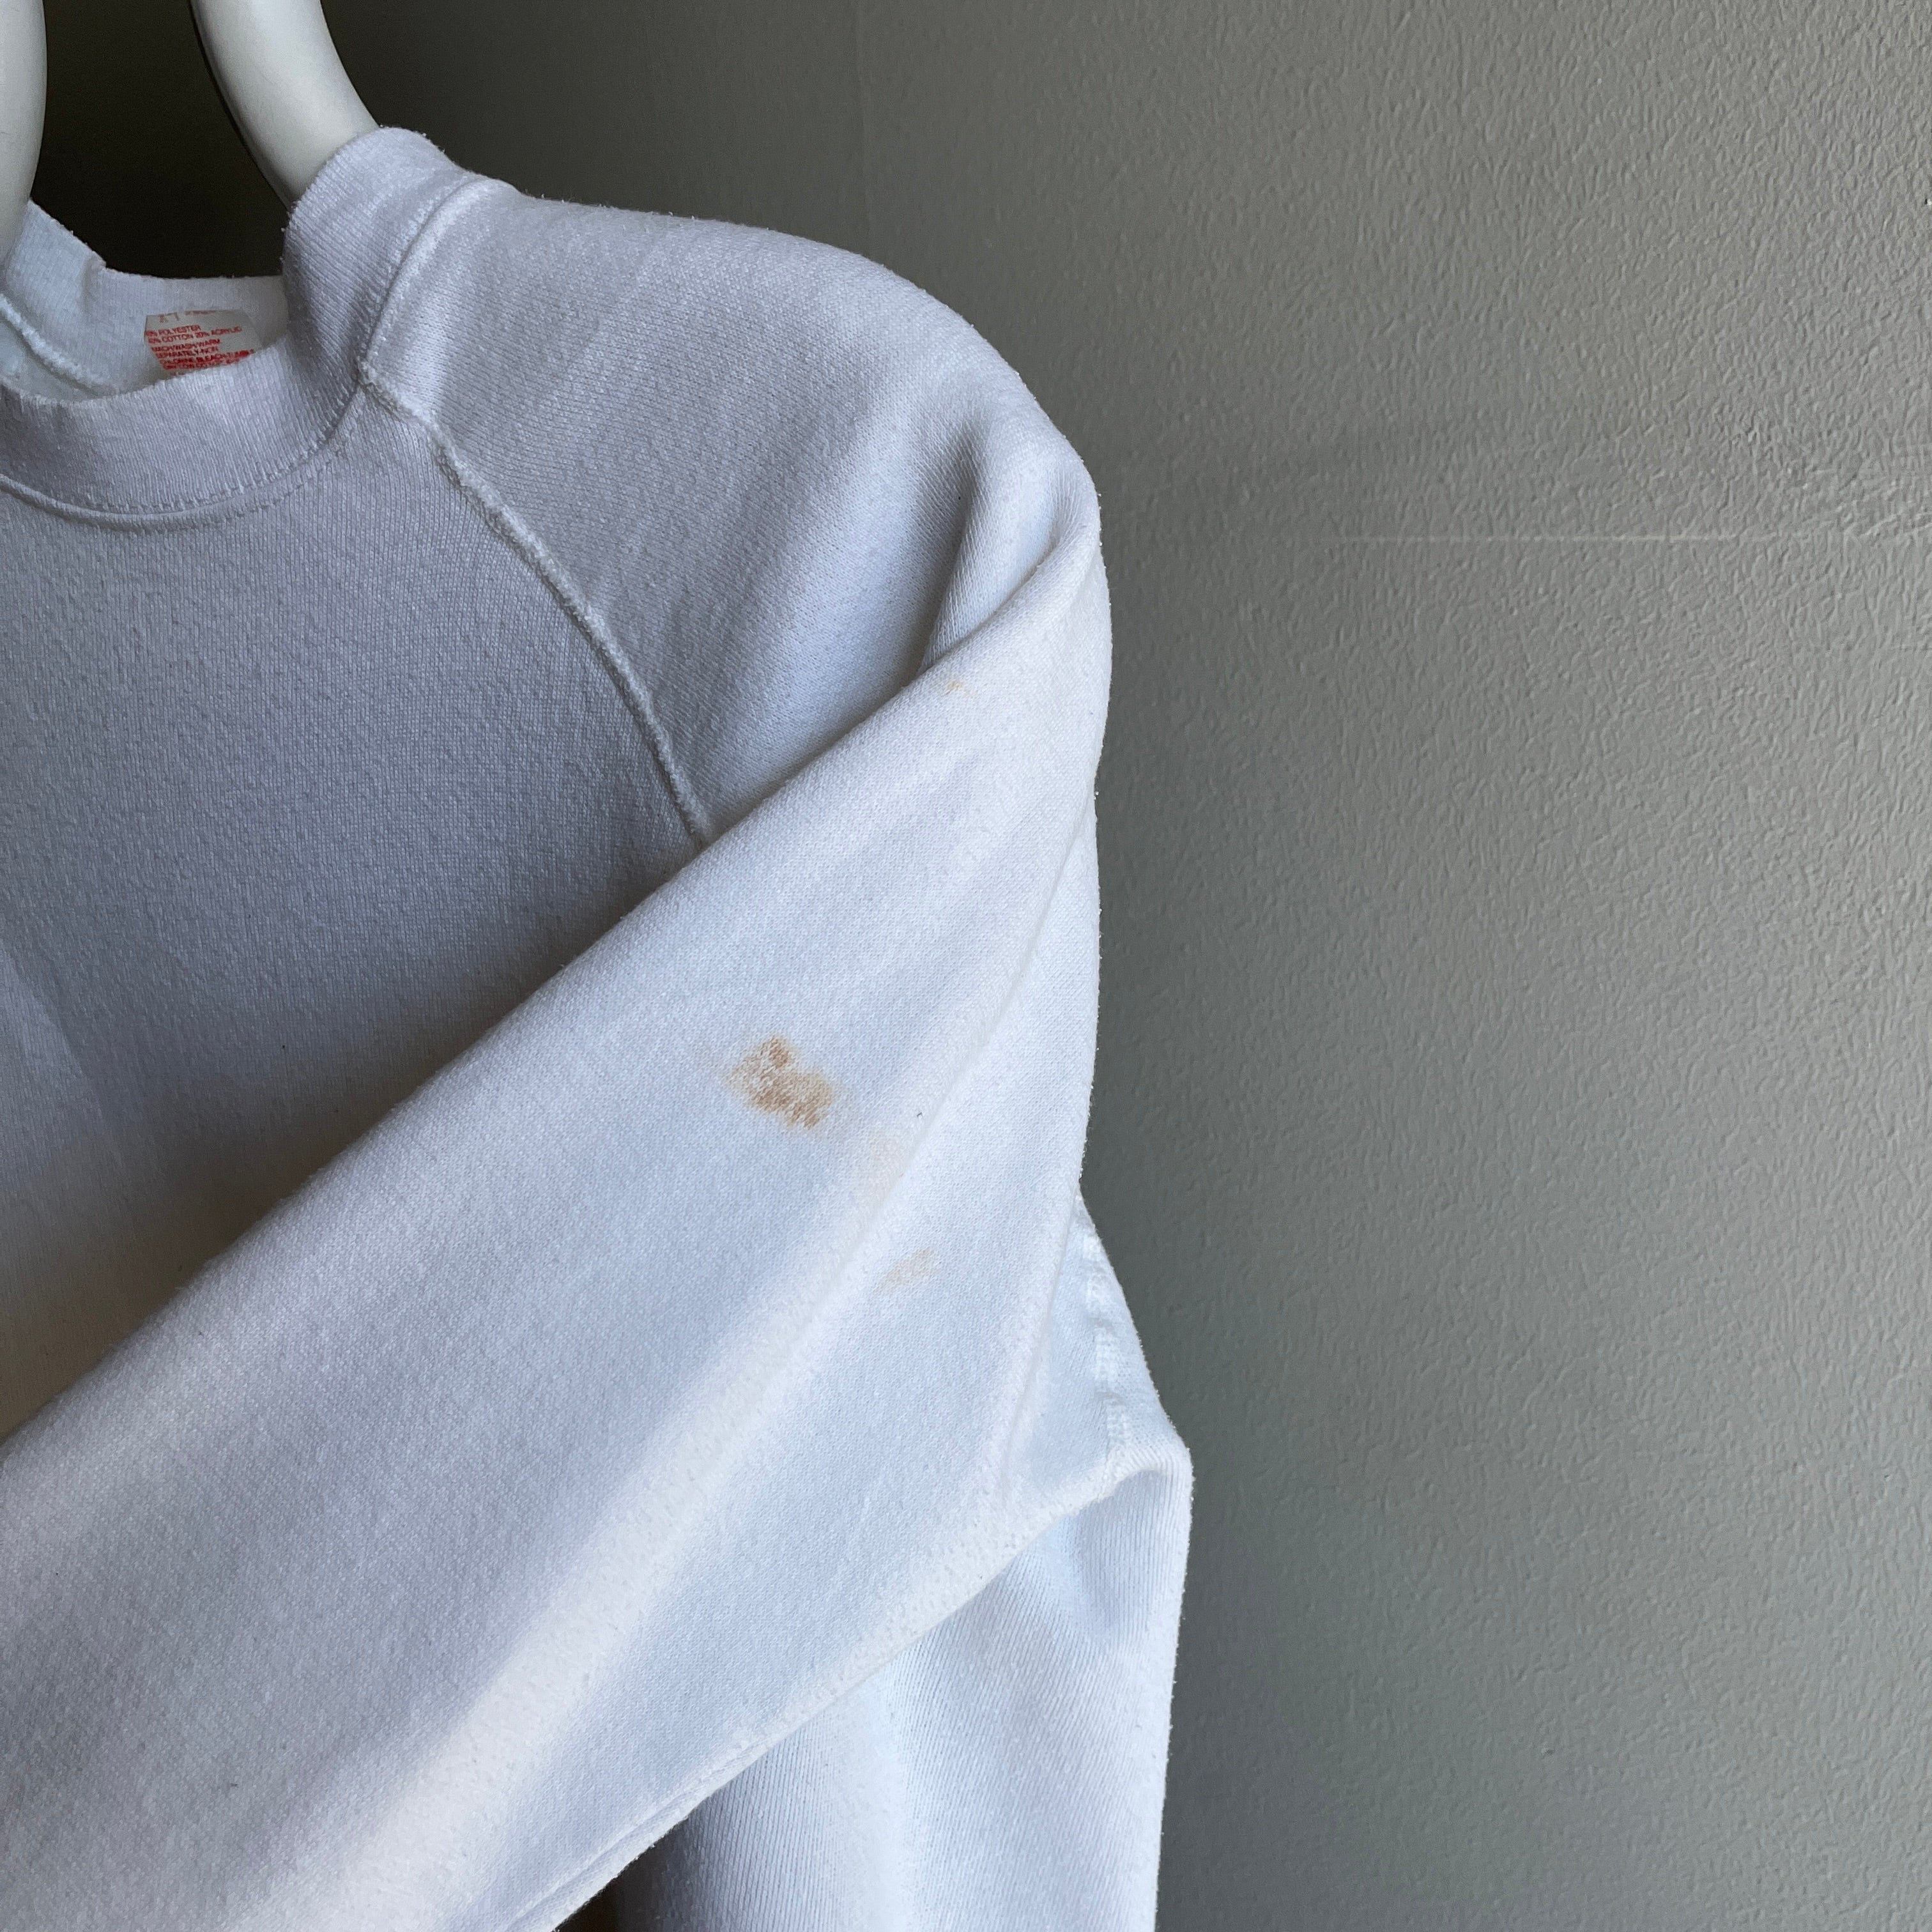 1980s Blank White Raglan Sweatshirt - USA Made